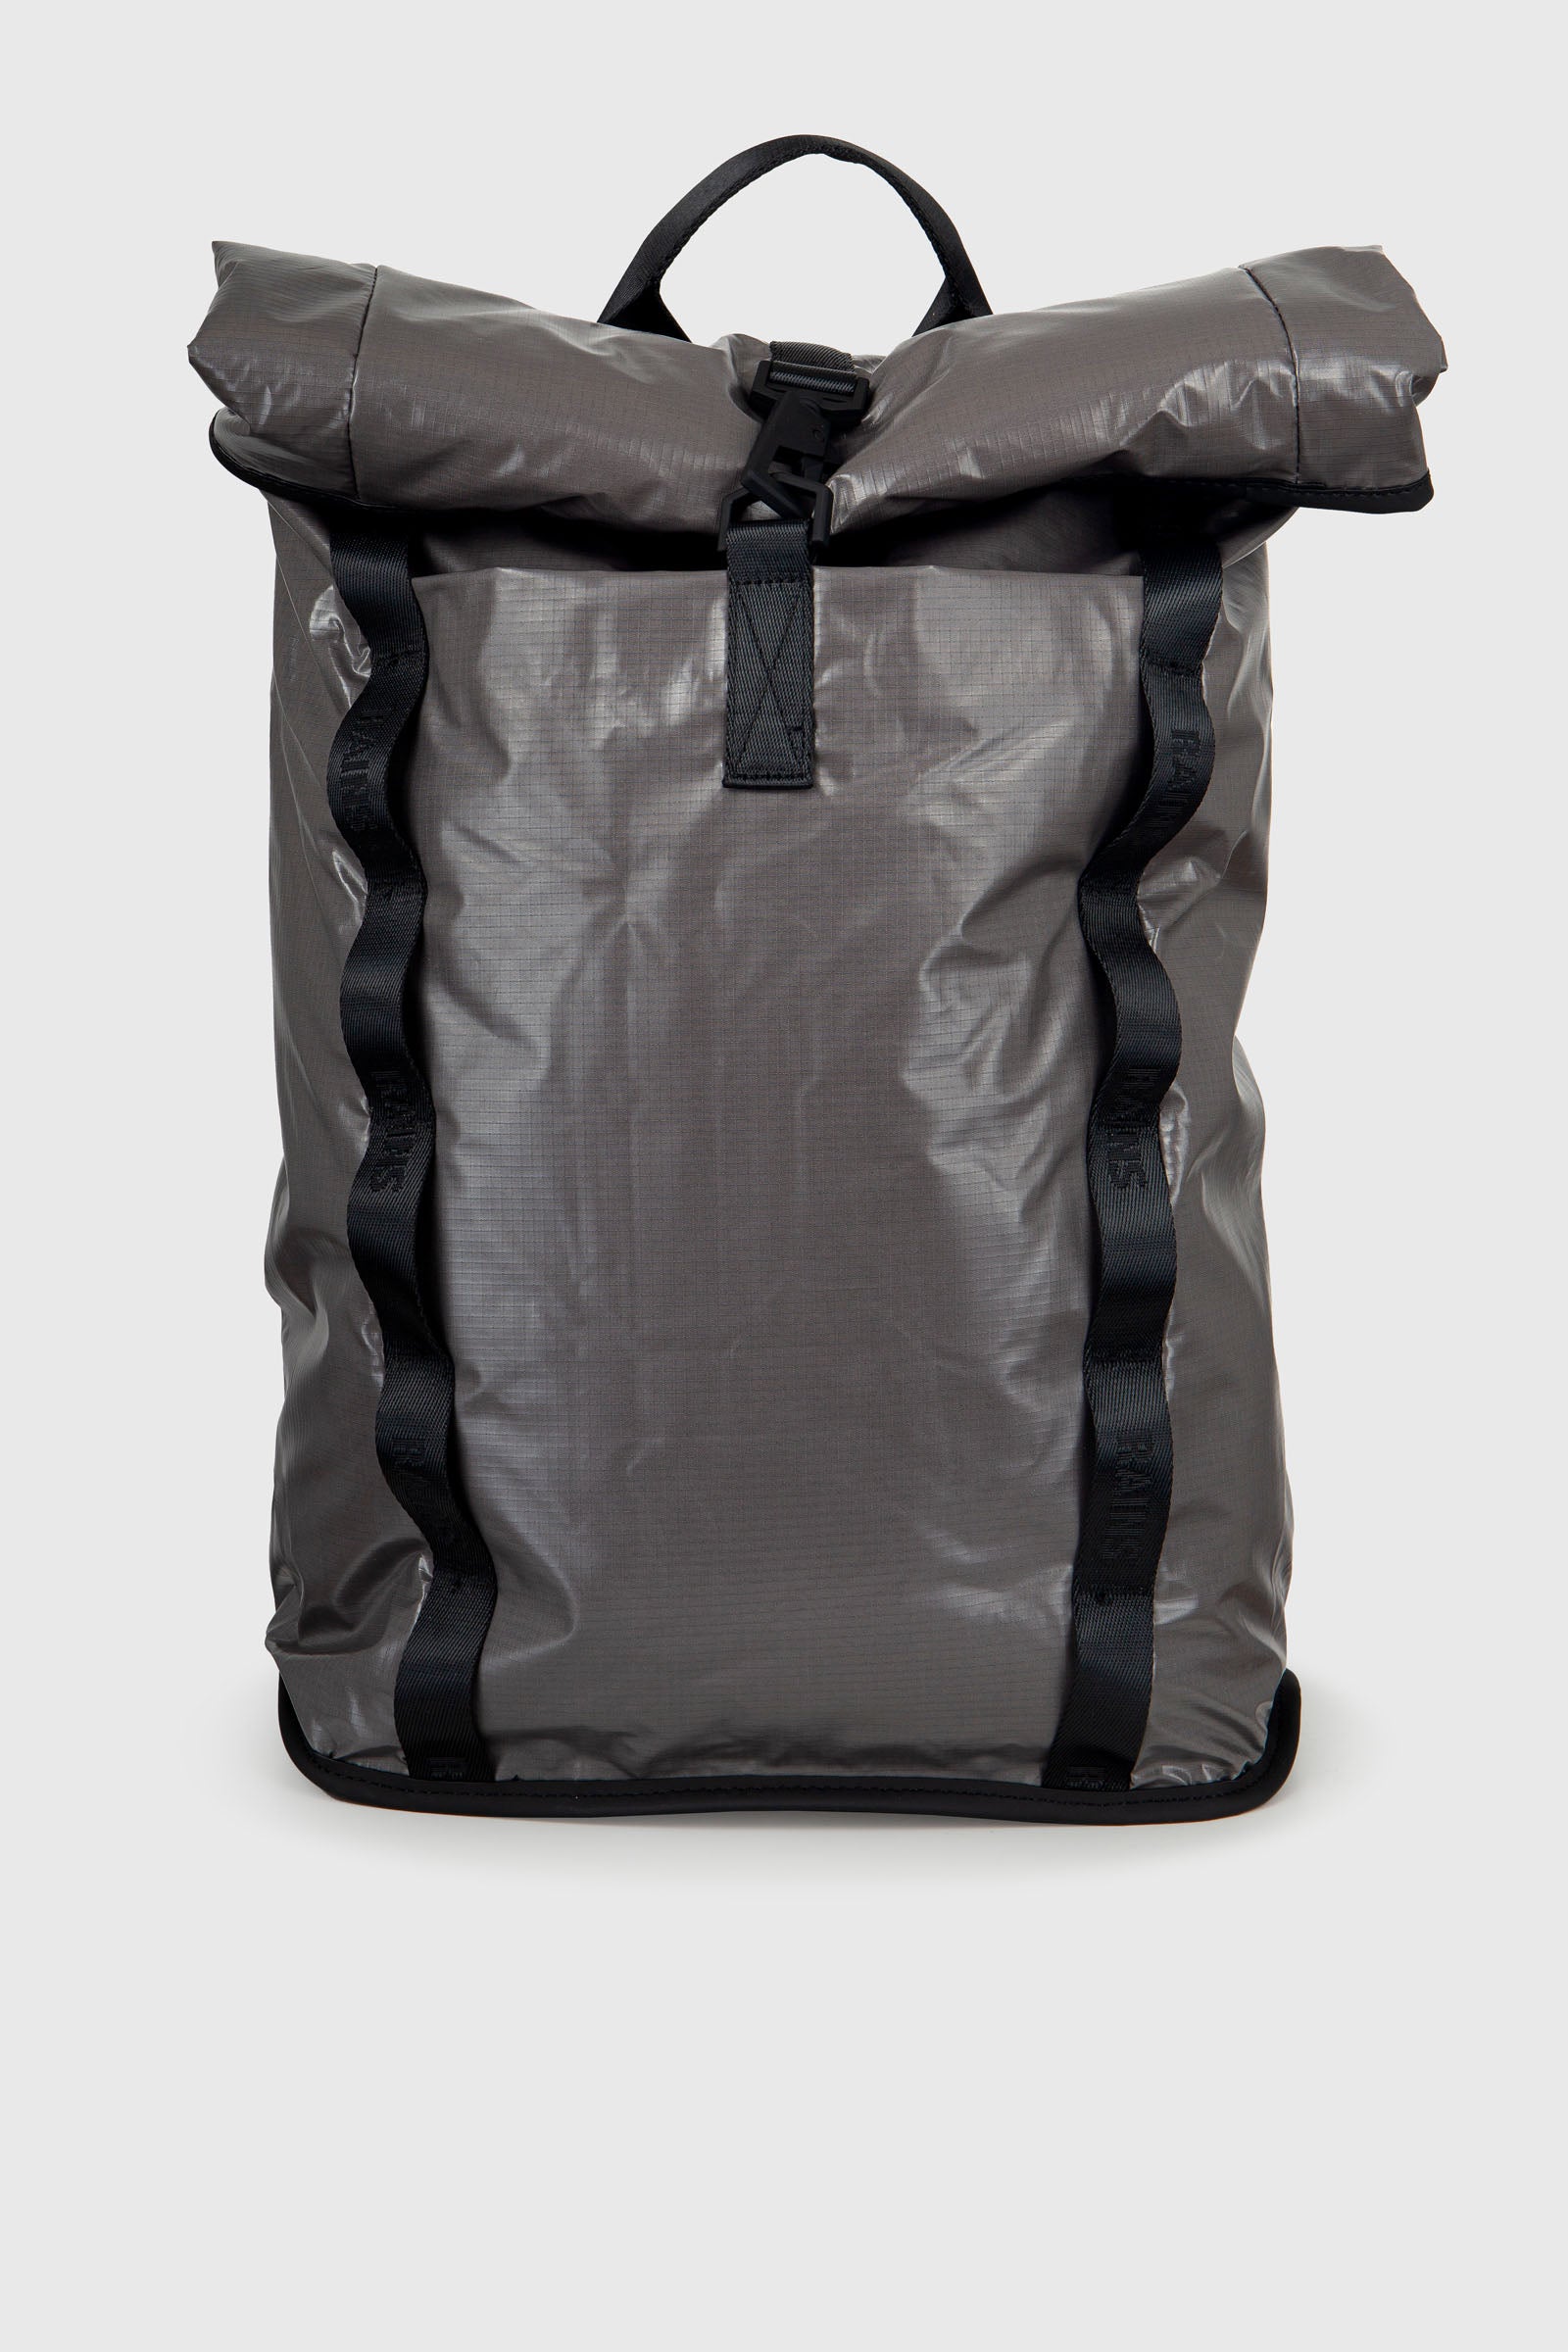 Rains Sibu Rolltop Backpack Synthetic Grey - 1